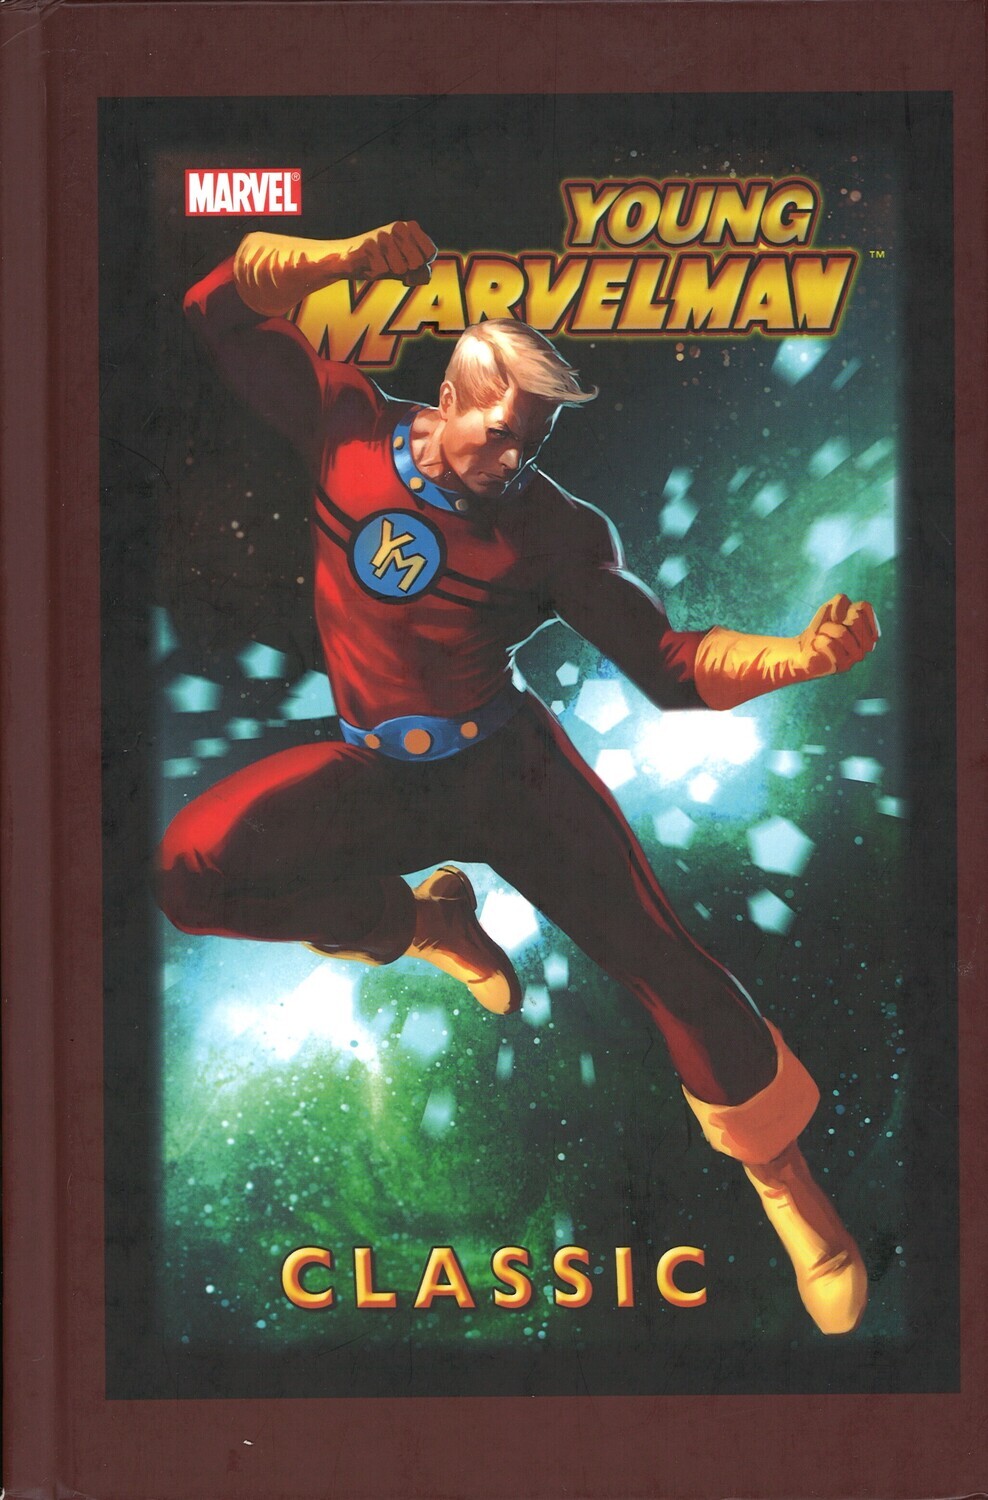 Young Marvelman Classic - Volume 1